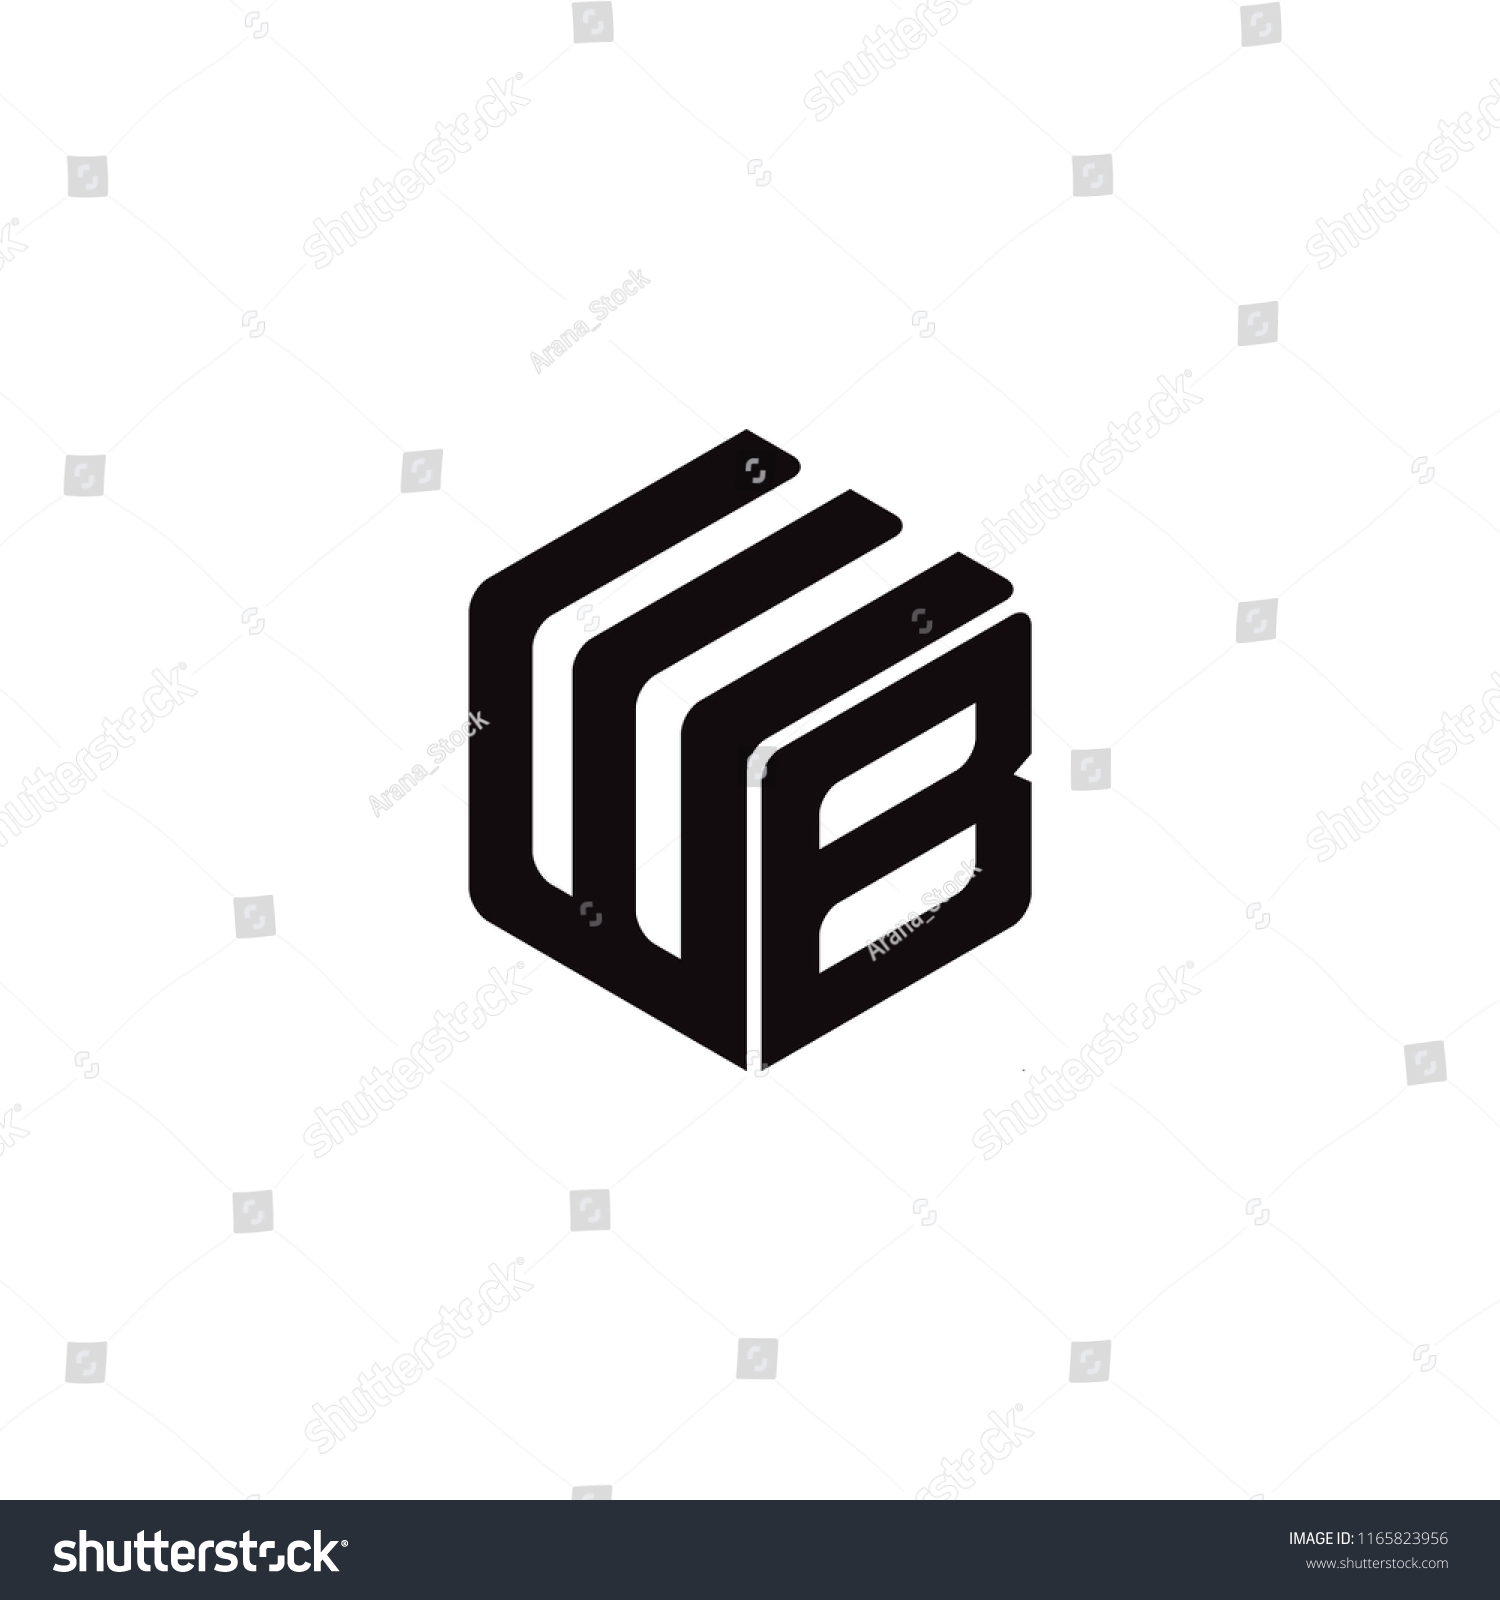 Letter wb logo Images, Stock Photos & Vectors | Shutterstock